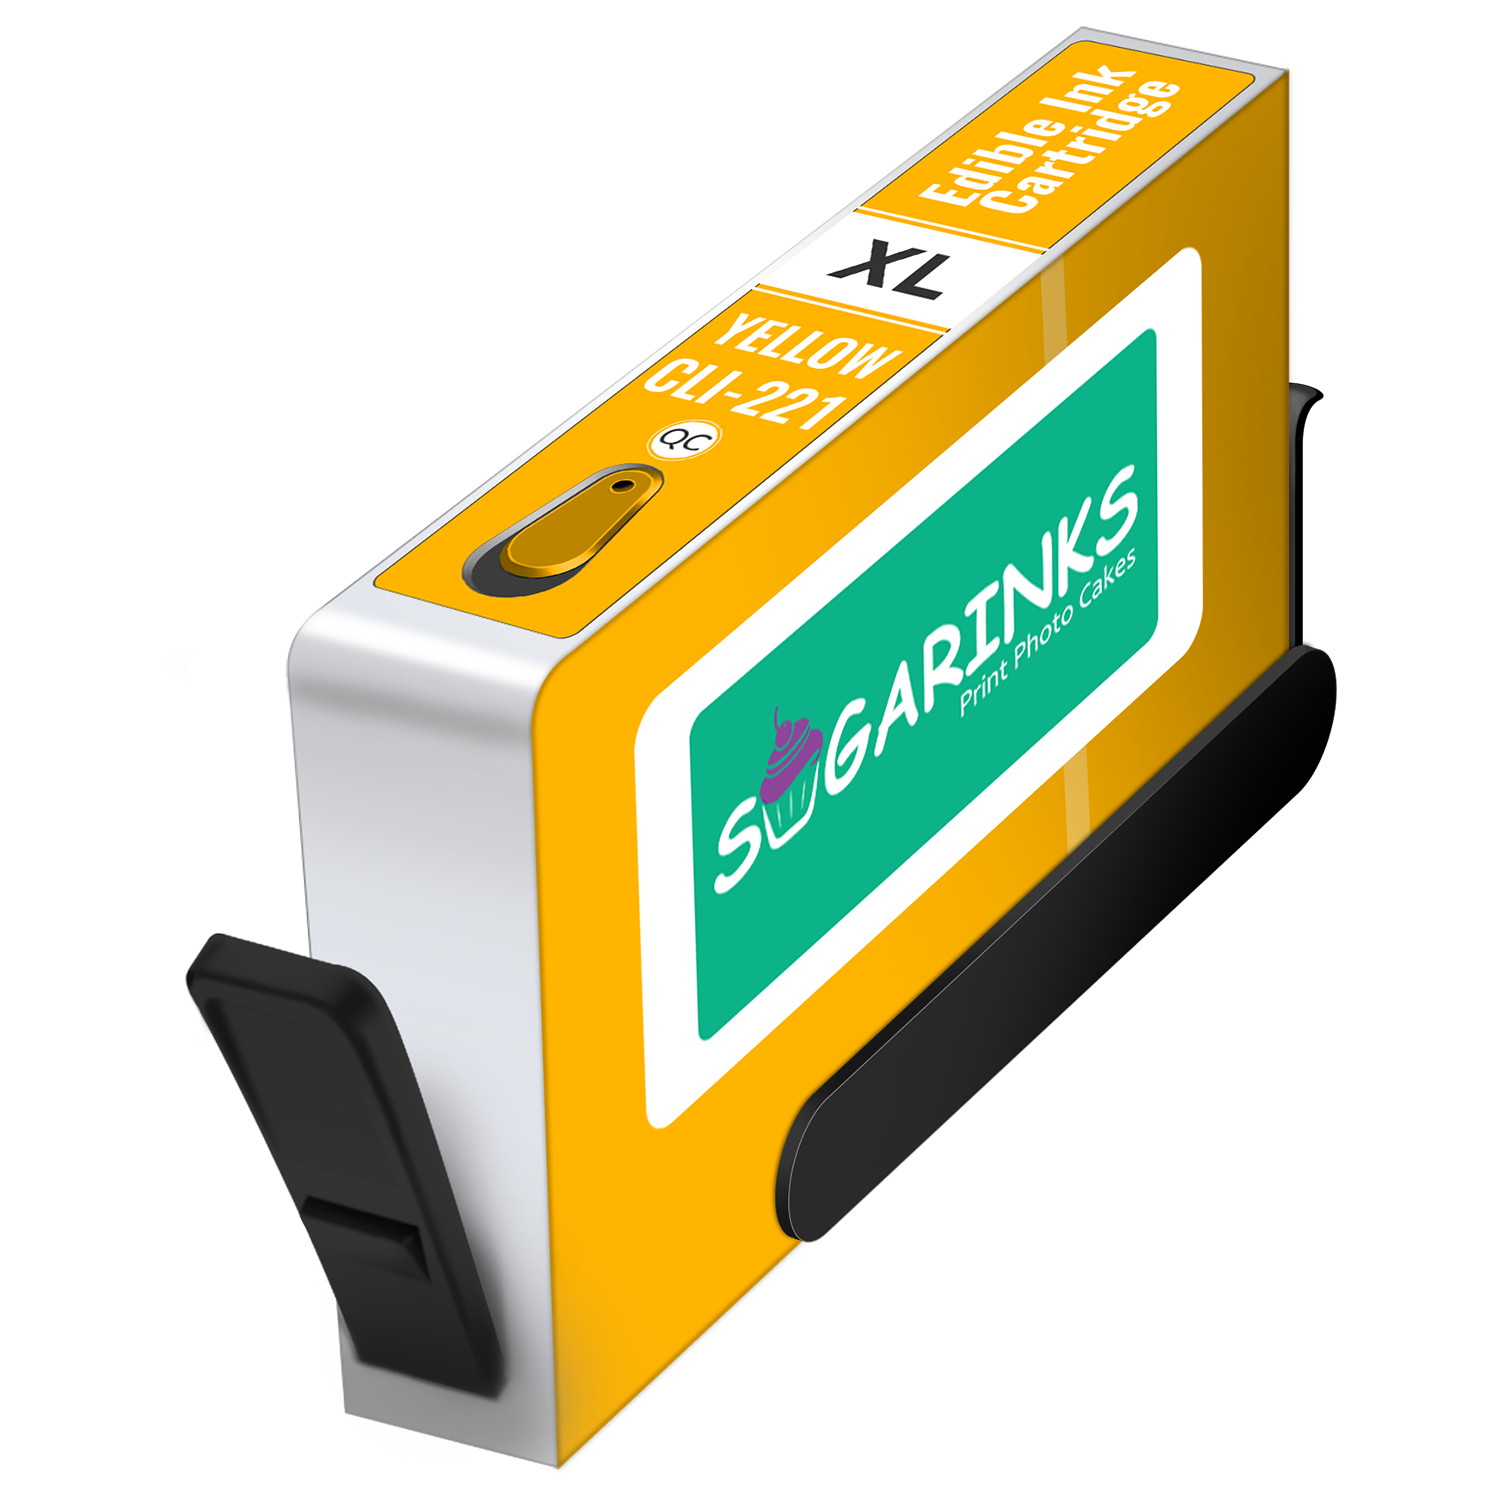 Sugarinks Edible Ink Cartridge CLI-221Y for Canon Edible Printers – Yellow